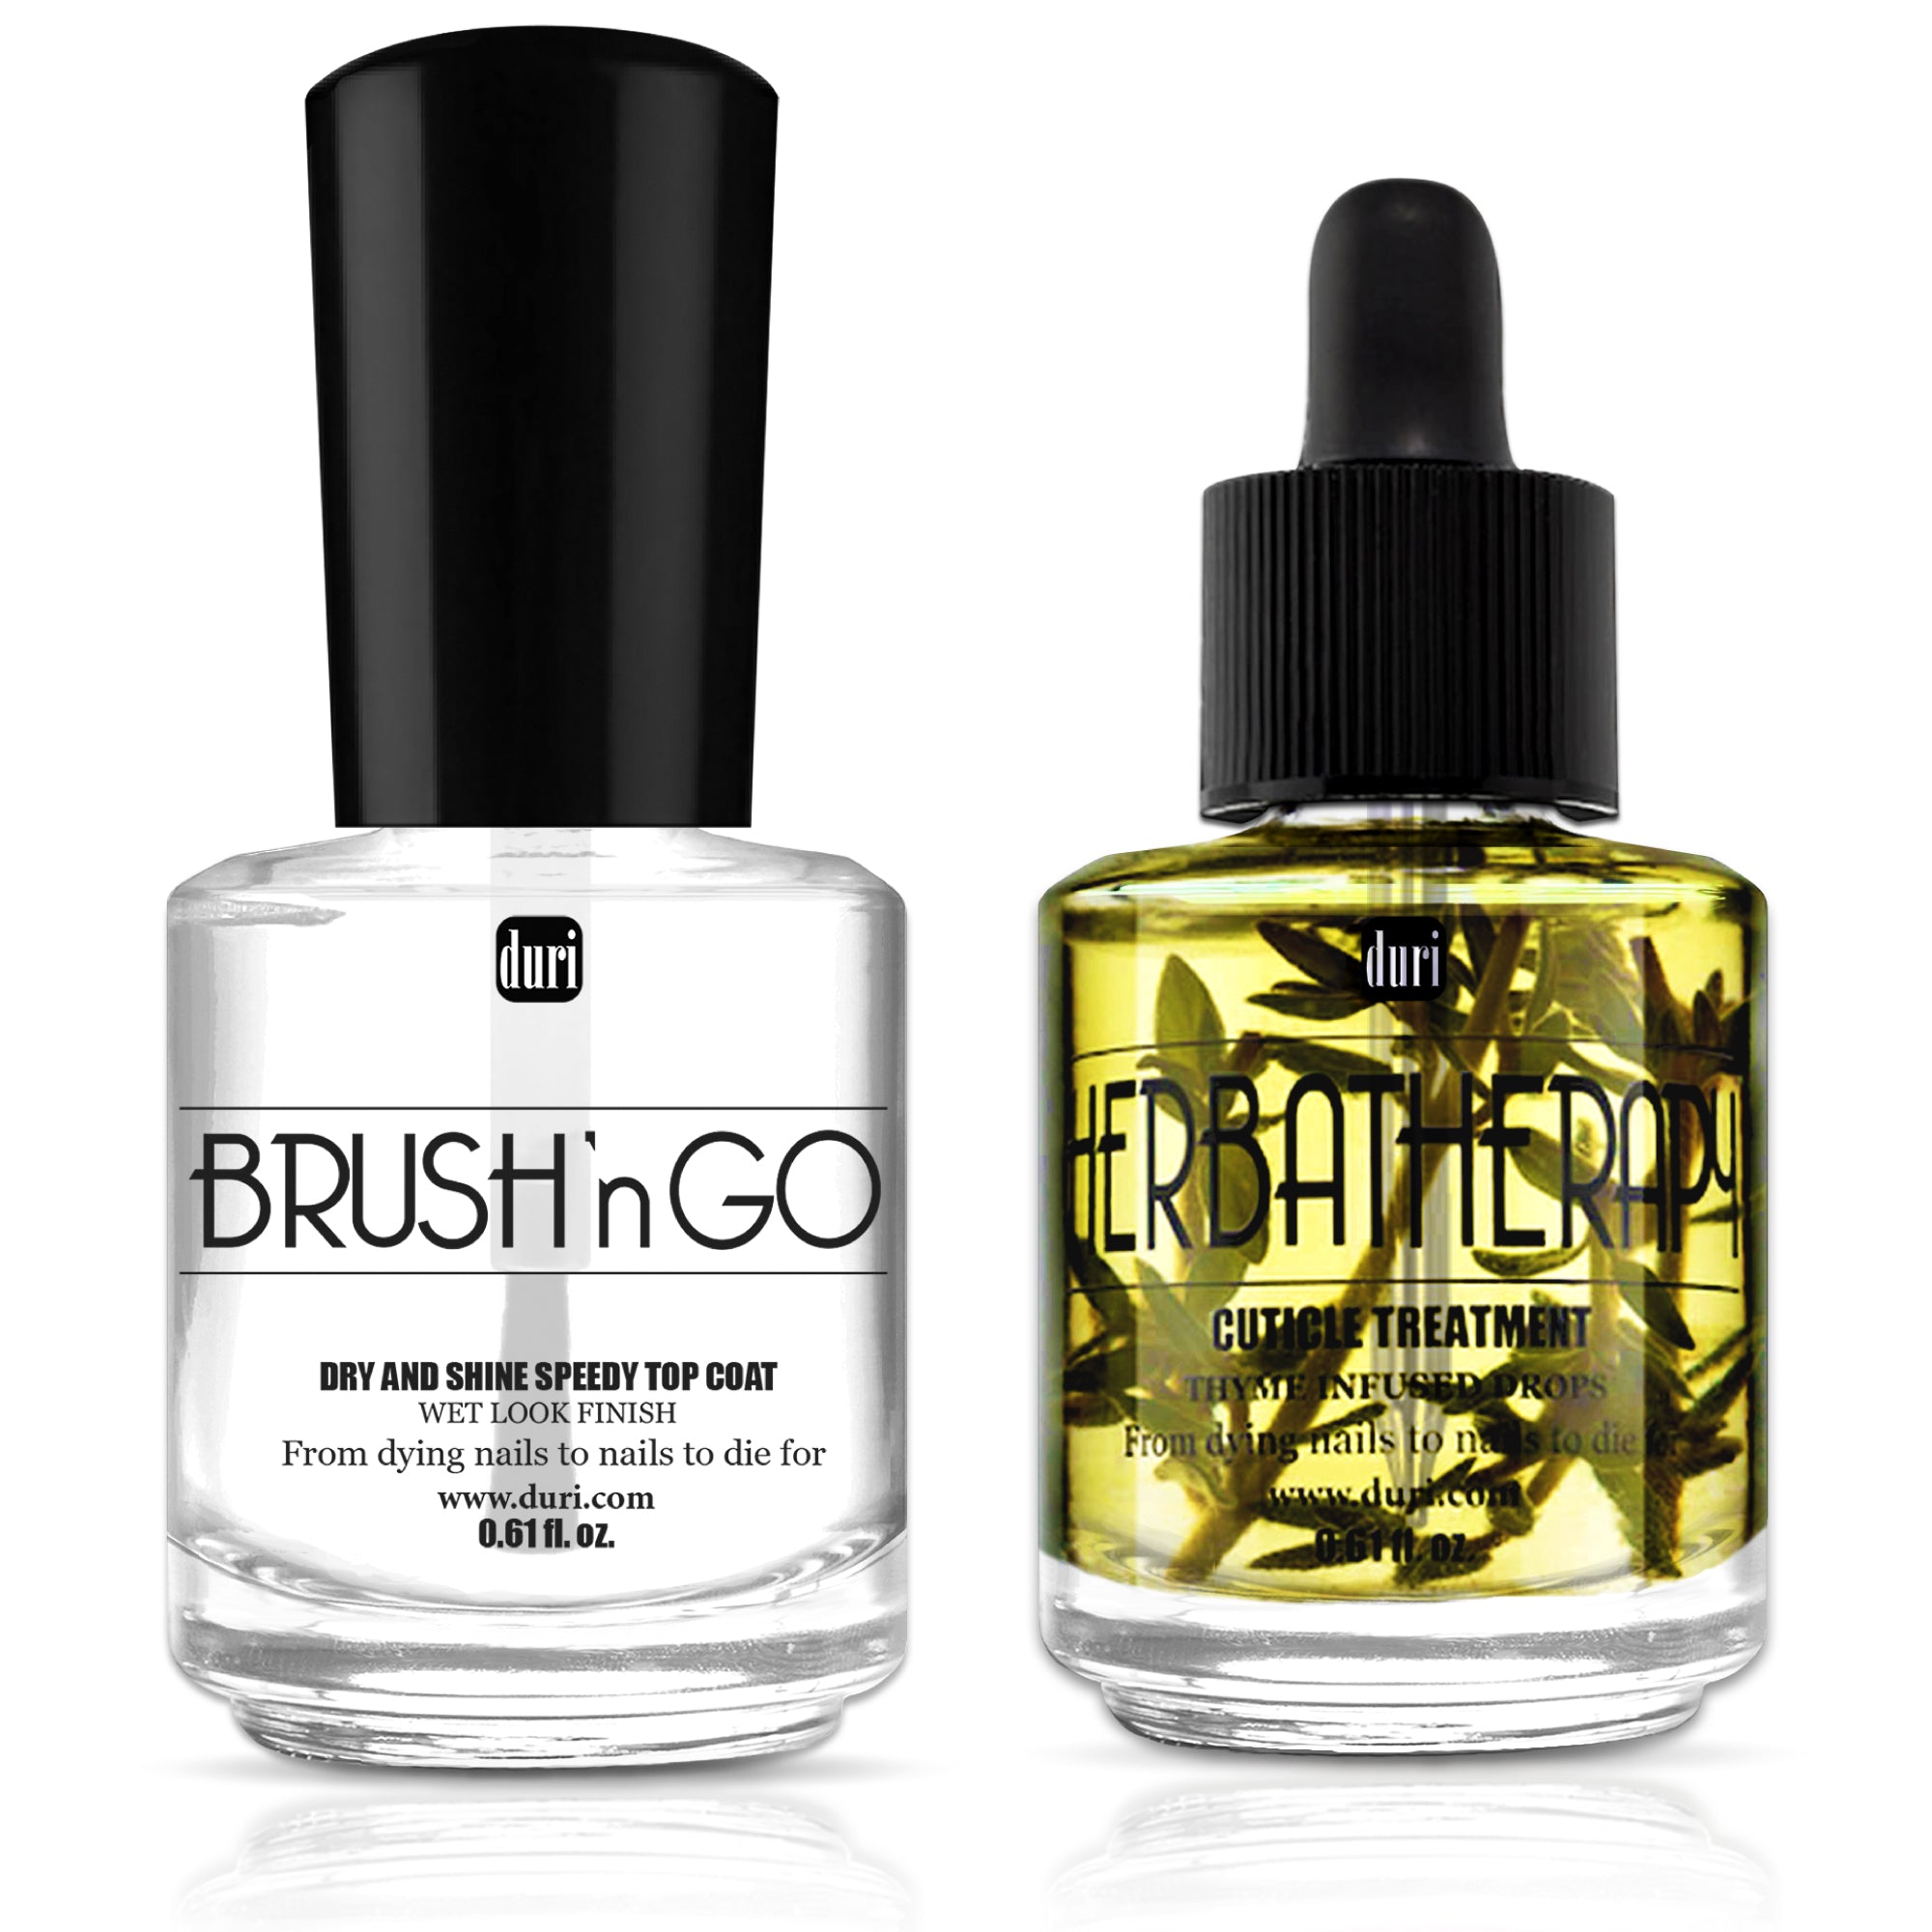 Brush’n GO Dry & Shine Speedy Top Coat + Herbatherapy Thyme Infused Cuticle Treatment Drops, 0.61 fl.oz. each